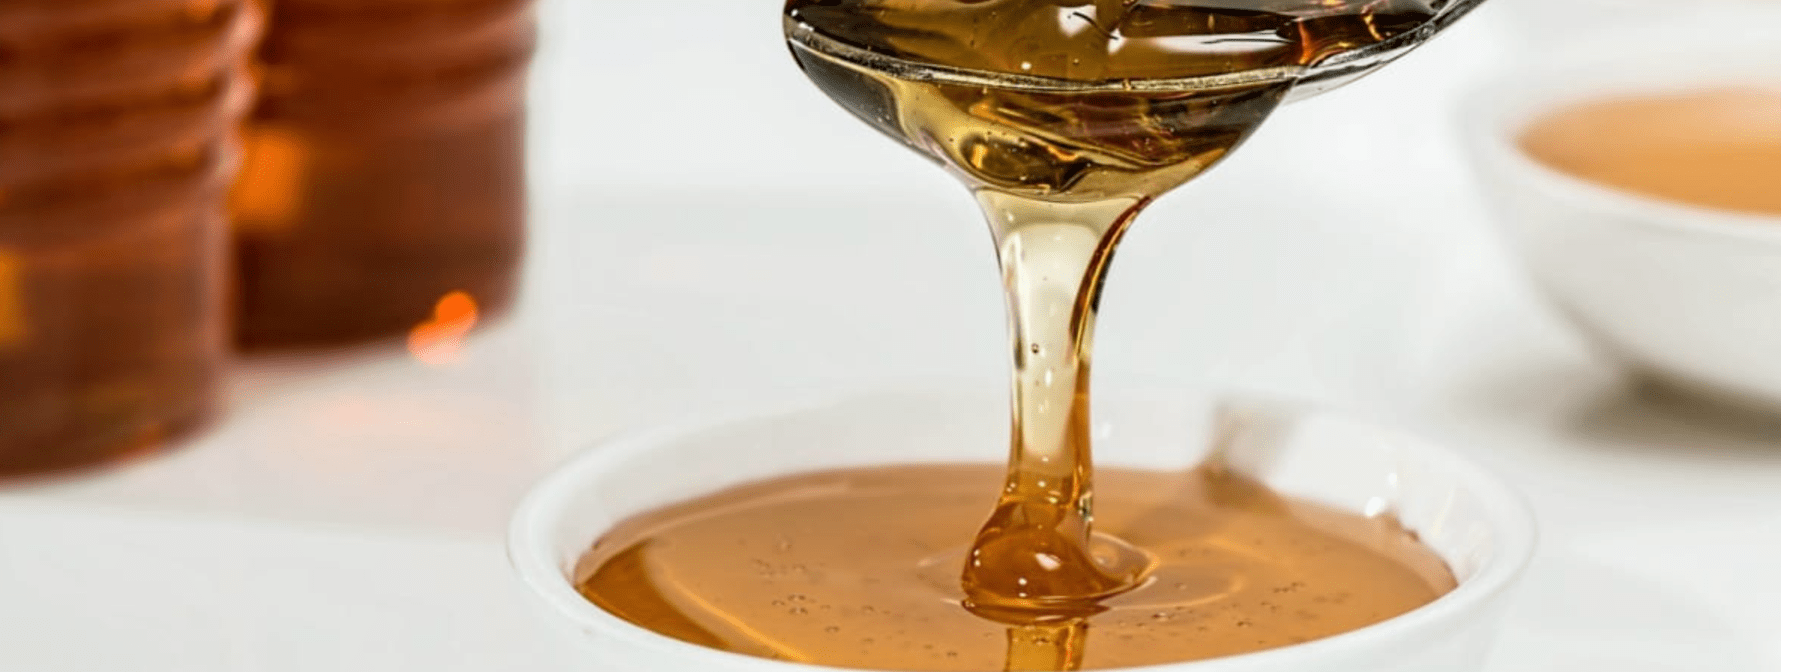 3 Manuka Honey Benefits You Should Know About